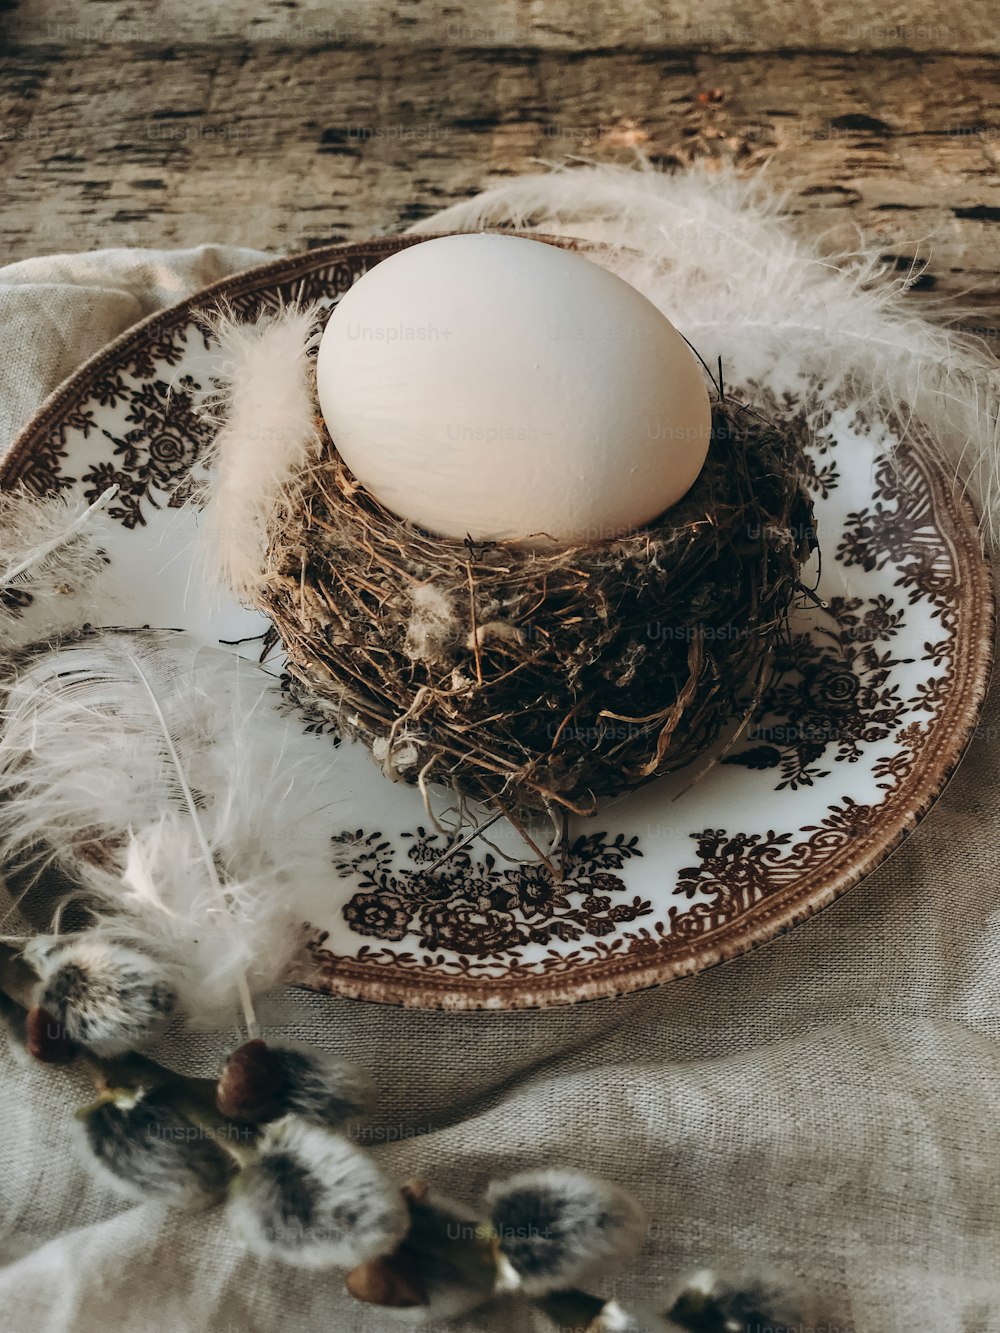 Elegante mesa rústica de Pascua. Huevo de pascua natural en nido con plumas suaves en plato vintage, servilleta de lino, ramas de sauce en madera envejecida. Bodegón rural de Semana Santa. Felices Pascuas